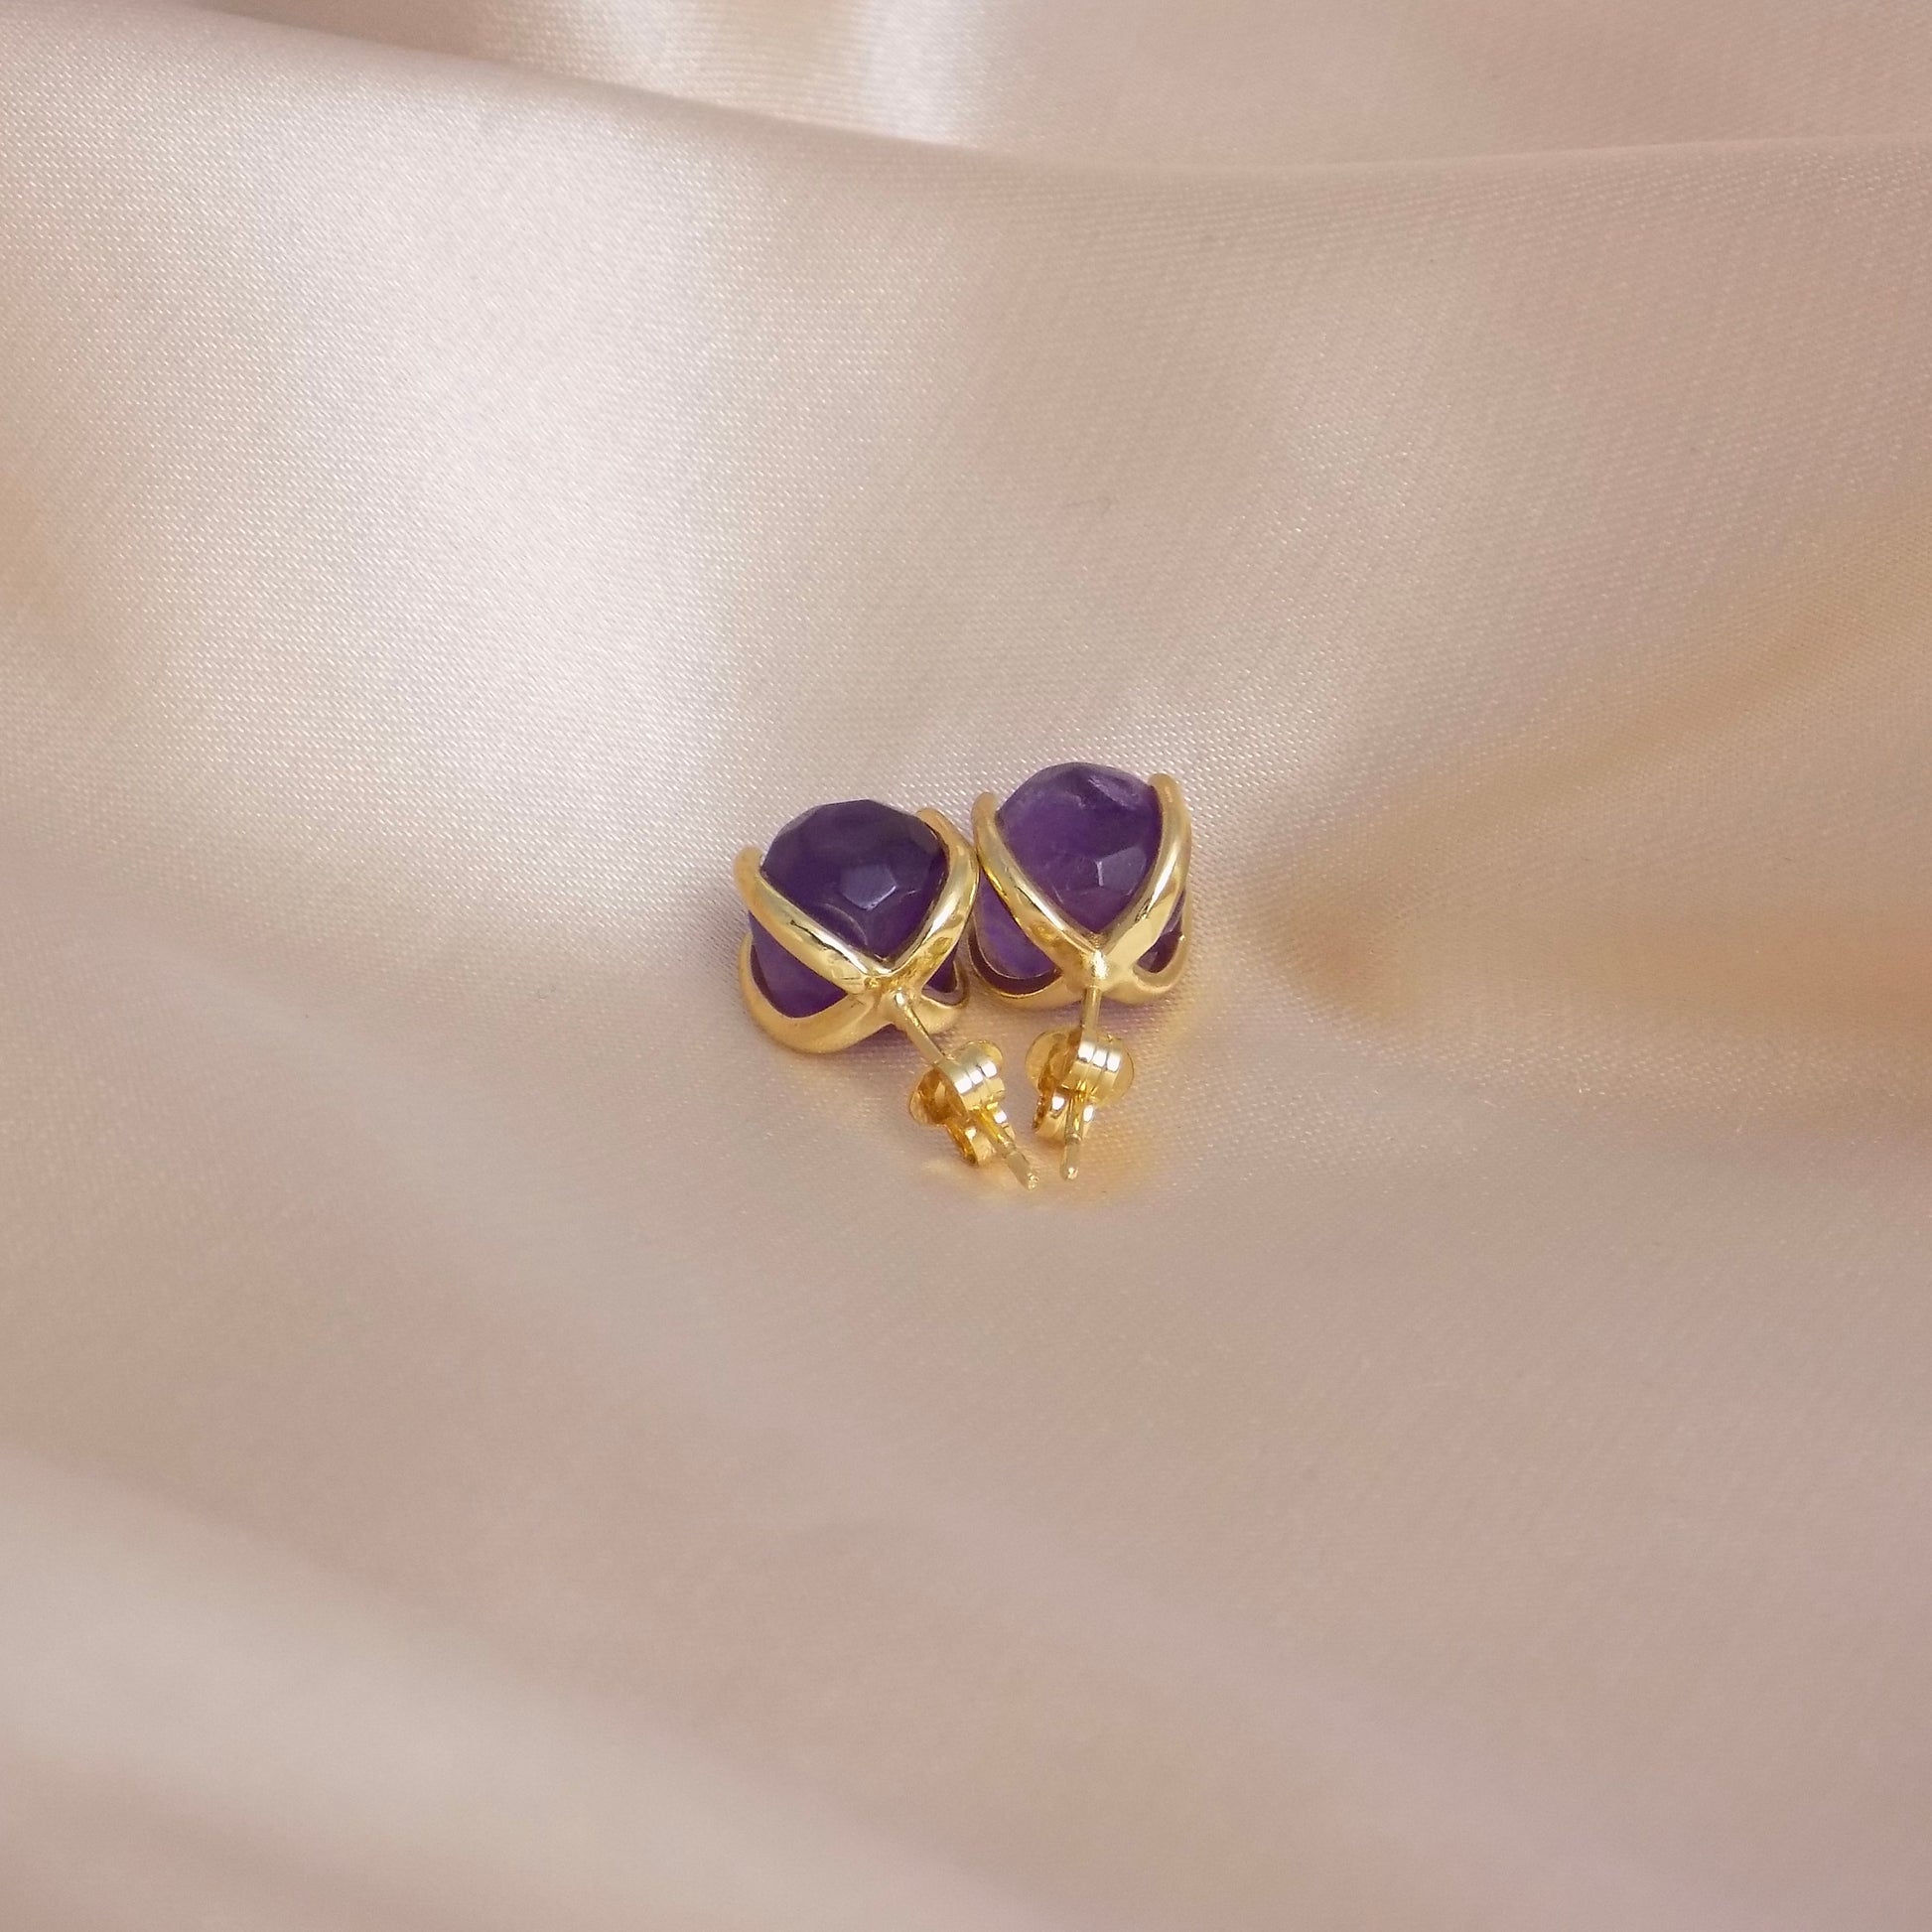 Amethyst Stud Earrings, Raw Amethyst Earrings, Purple Gemstone Earrings, Small Stone Posts Gold, Raw Stone Posts, M6-742